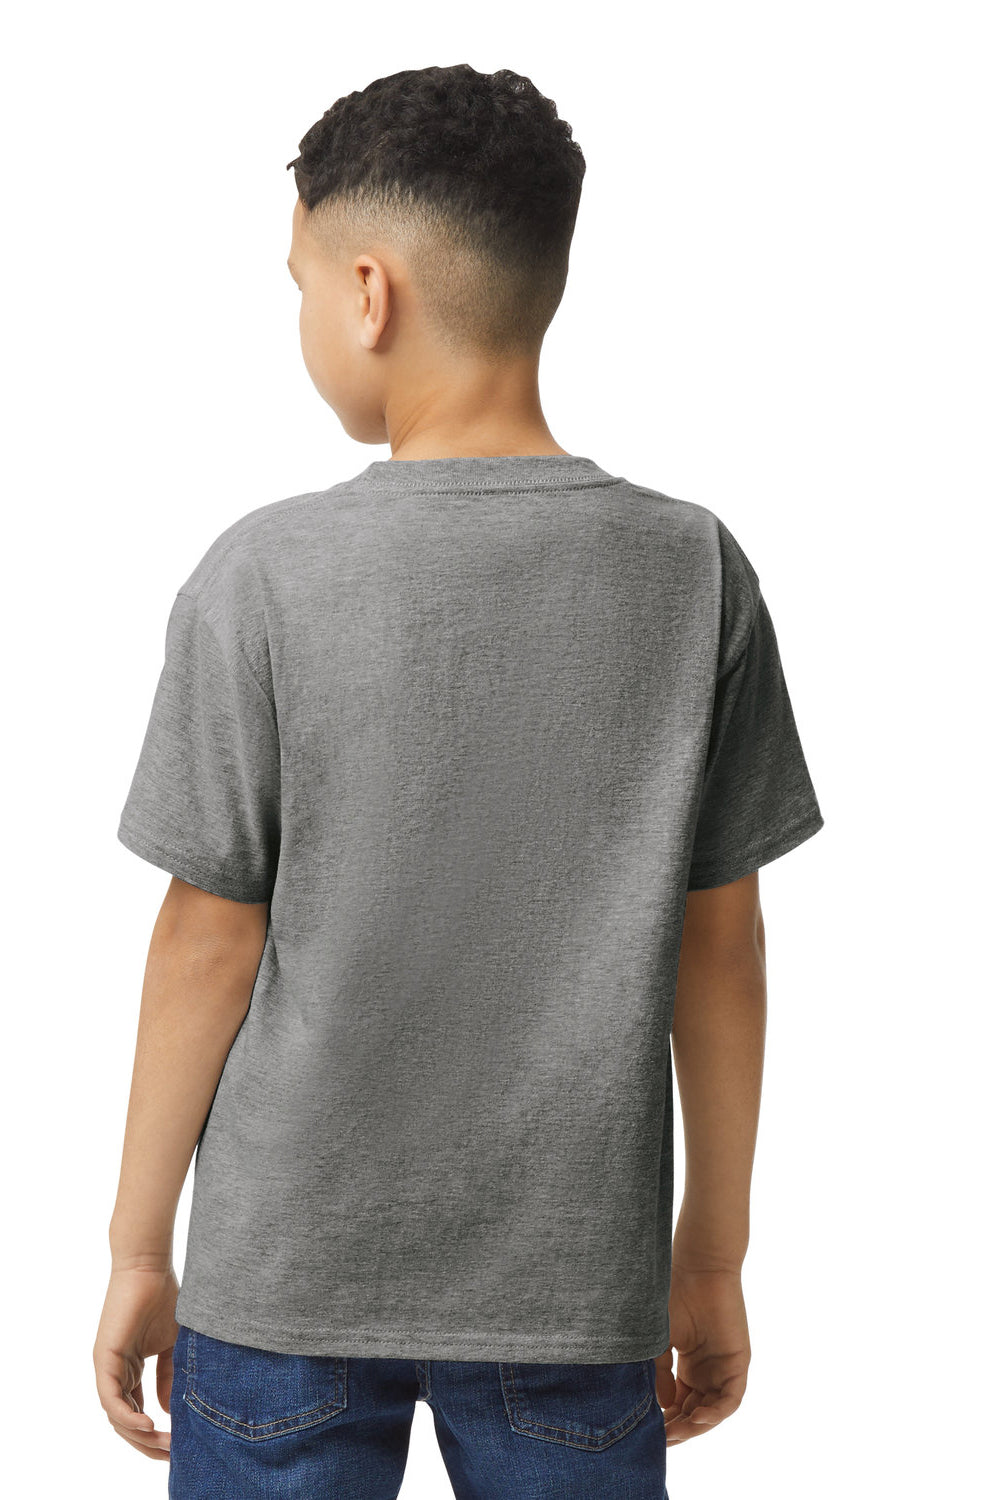 Gildan 64000B Youth Softstyle Short Sleeve Crewneck T-Shirt Heather Graphite Grey Back